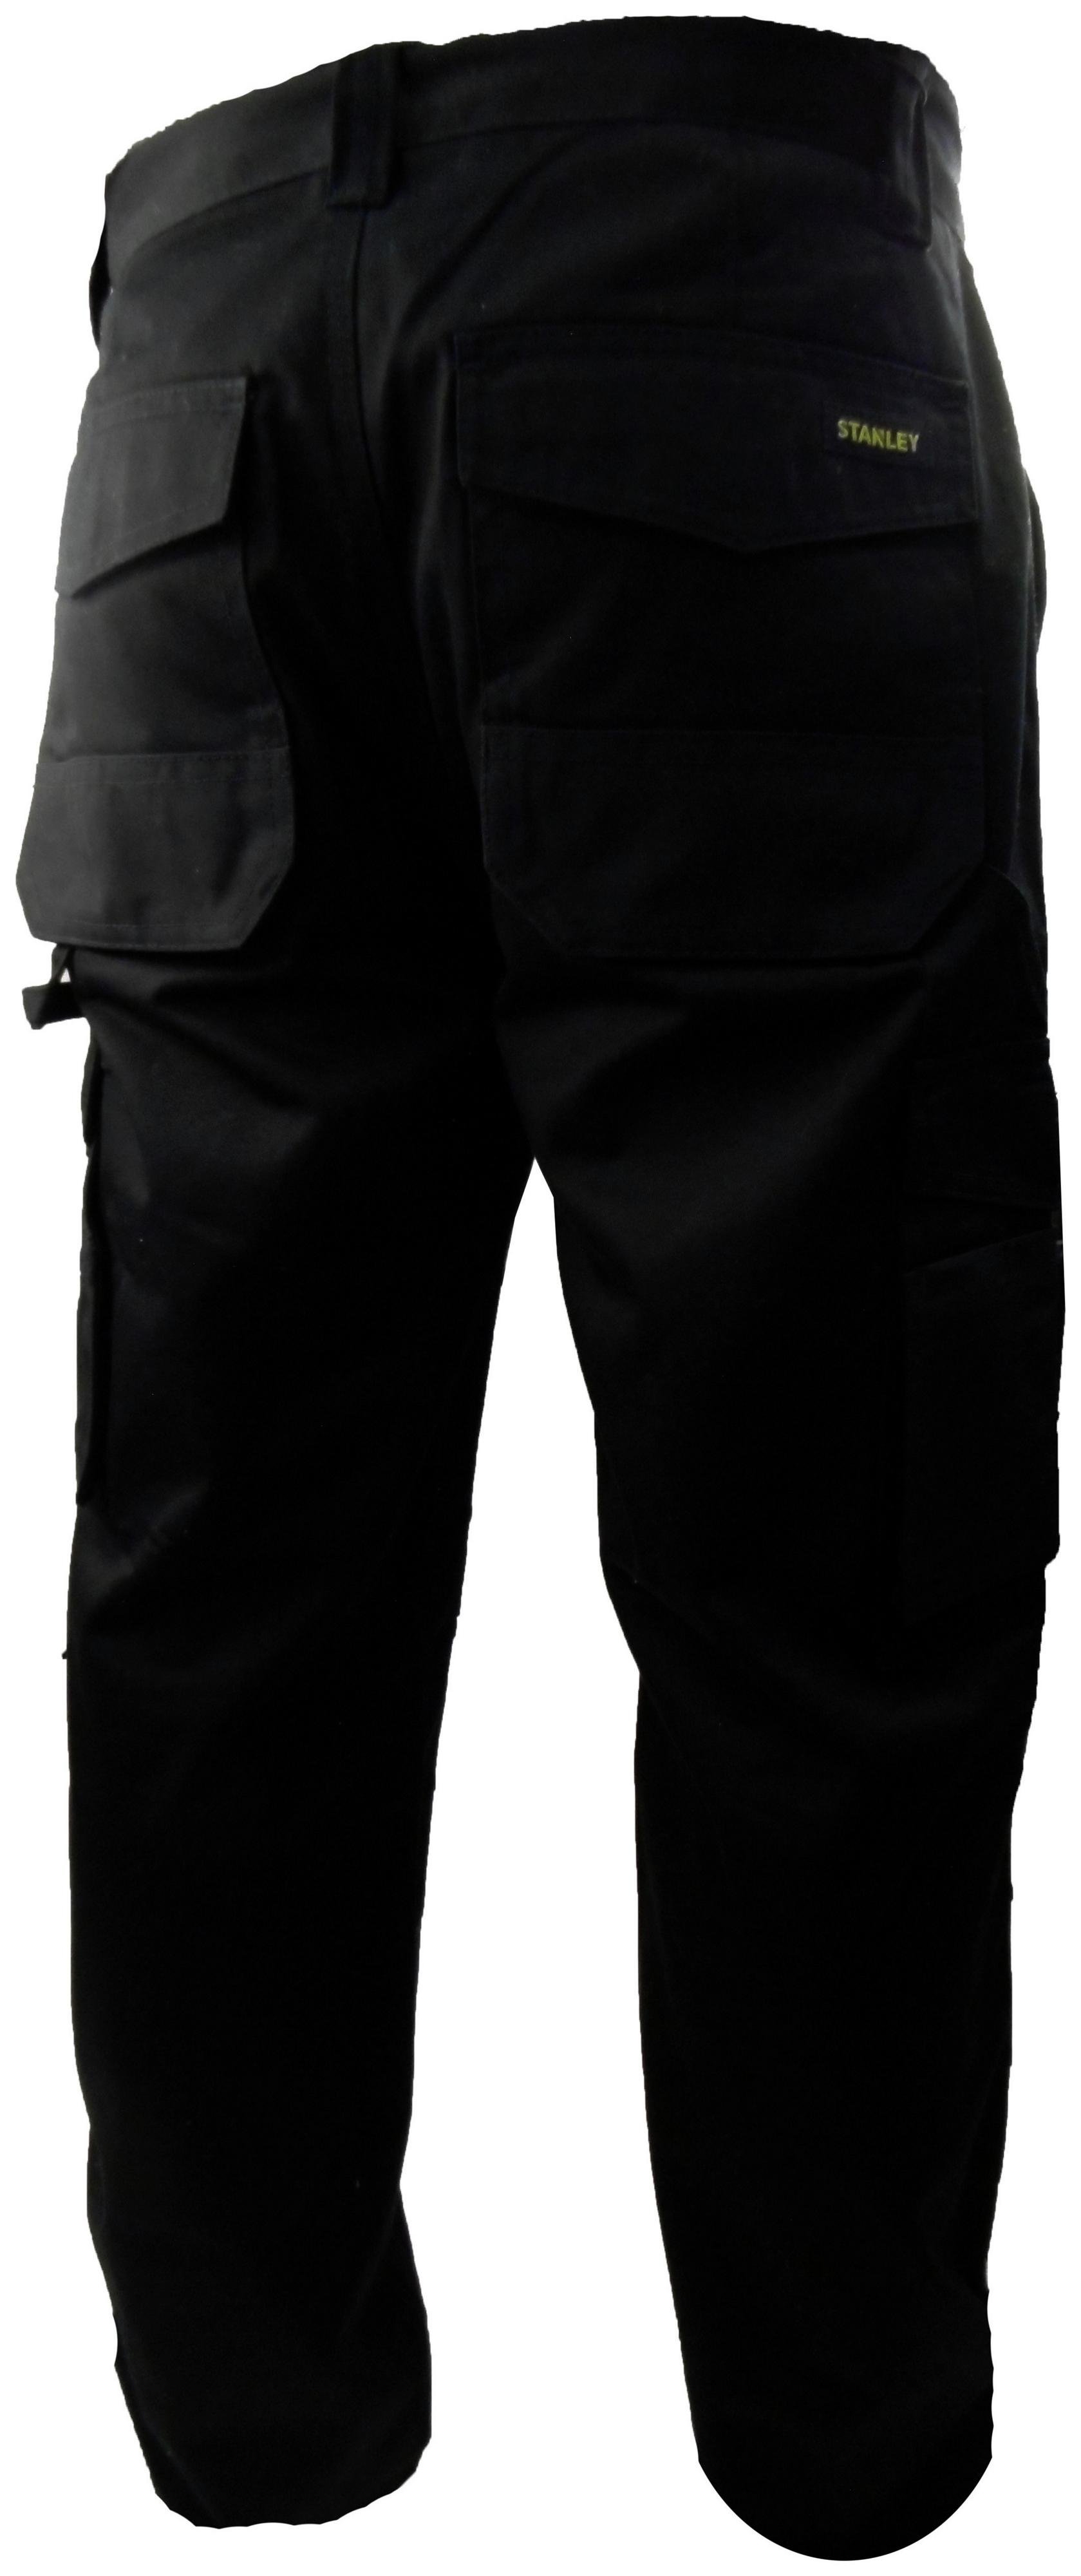 Stanley Phoenix Men's Black Trouser - 31 to 34 inch. Review